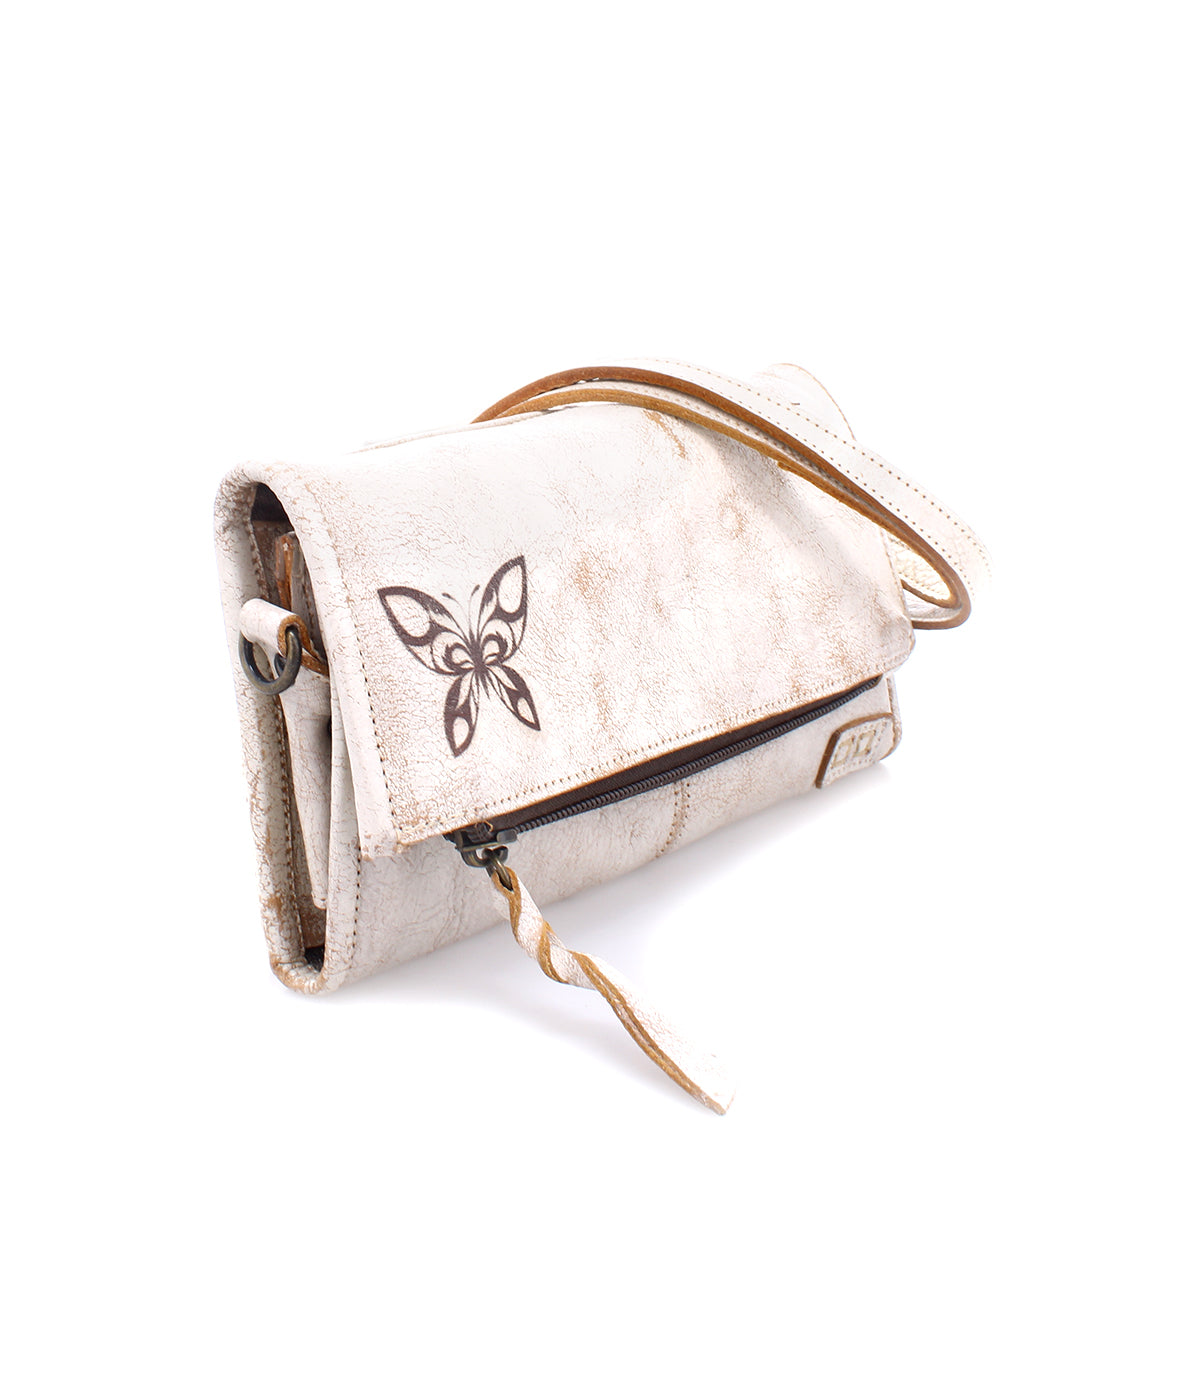 A sleek Bed Stu Amina II clutch purse with a butterfly on it.